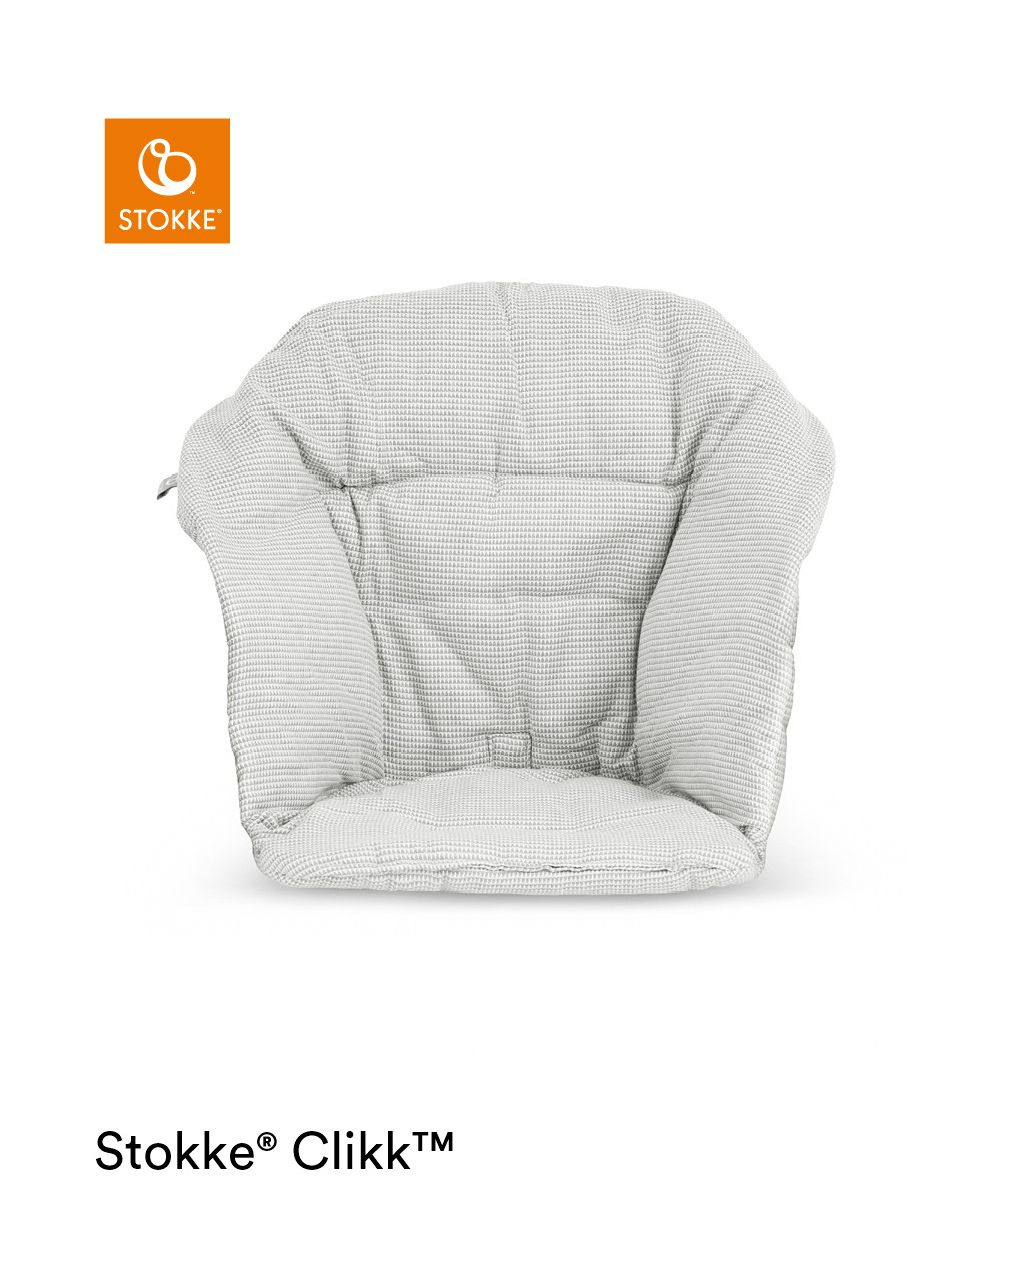 Stokke® clikk™ cushion